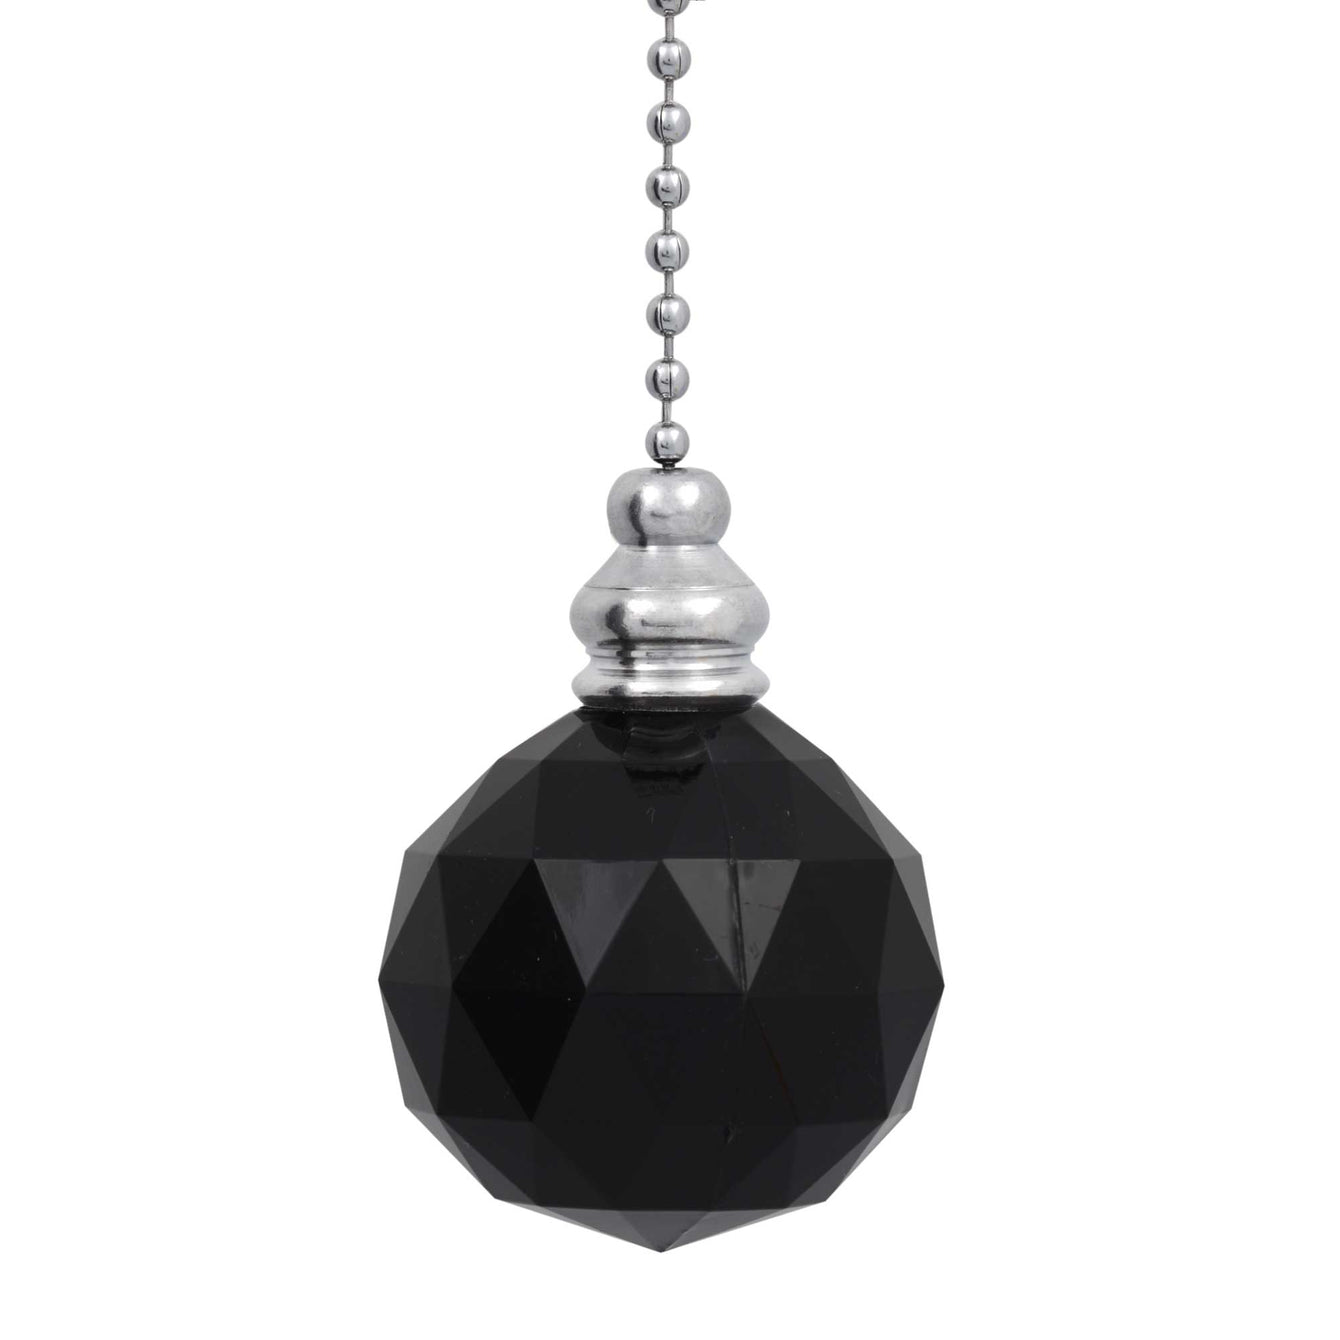 ElekTek Light Pull Chain Acrylic Crystal Ball With 80cm Matching Chain 